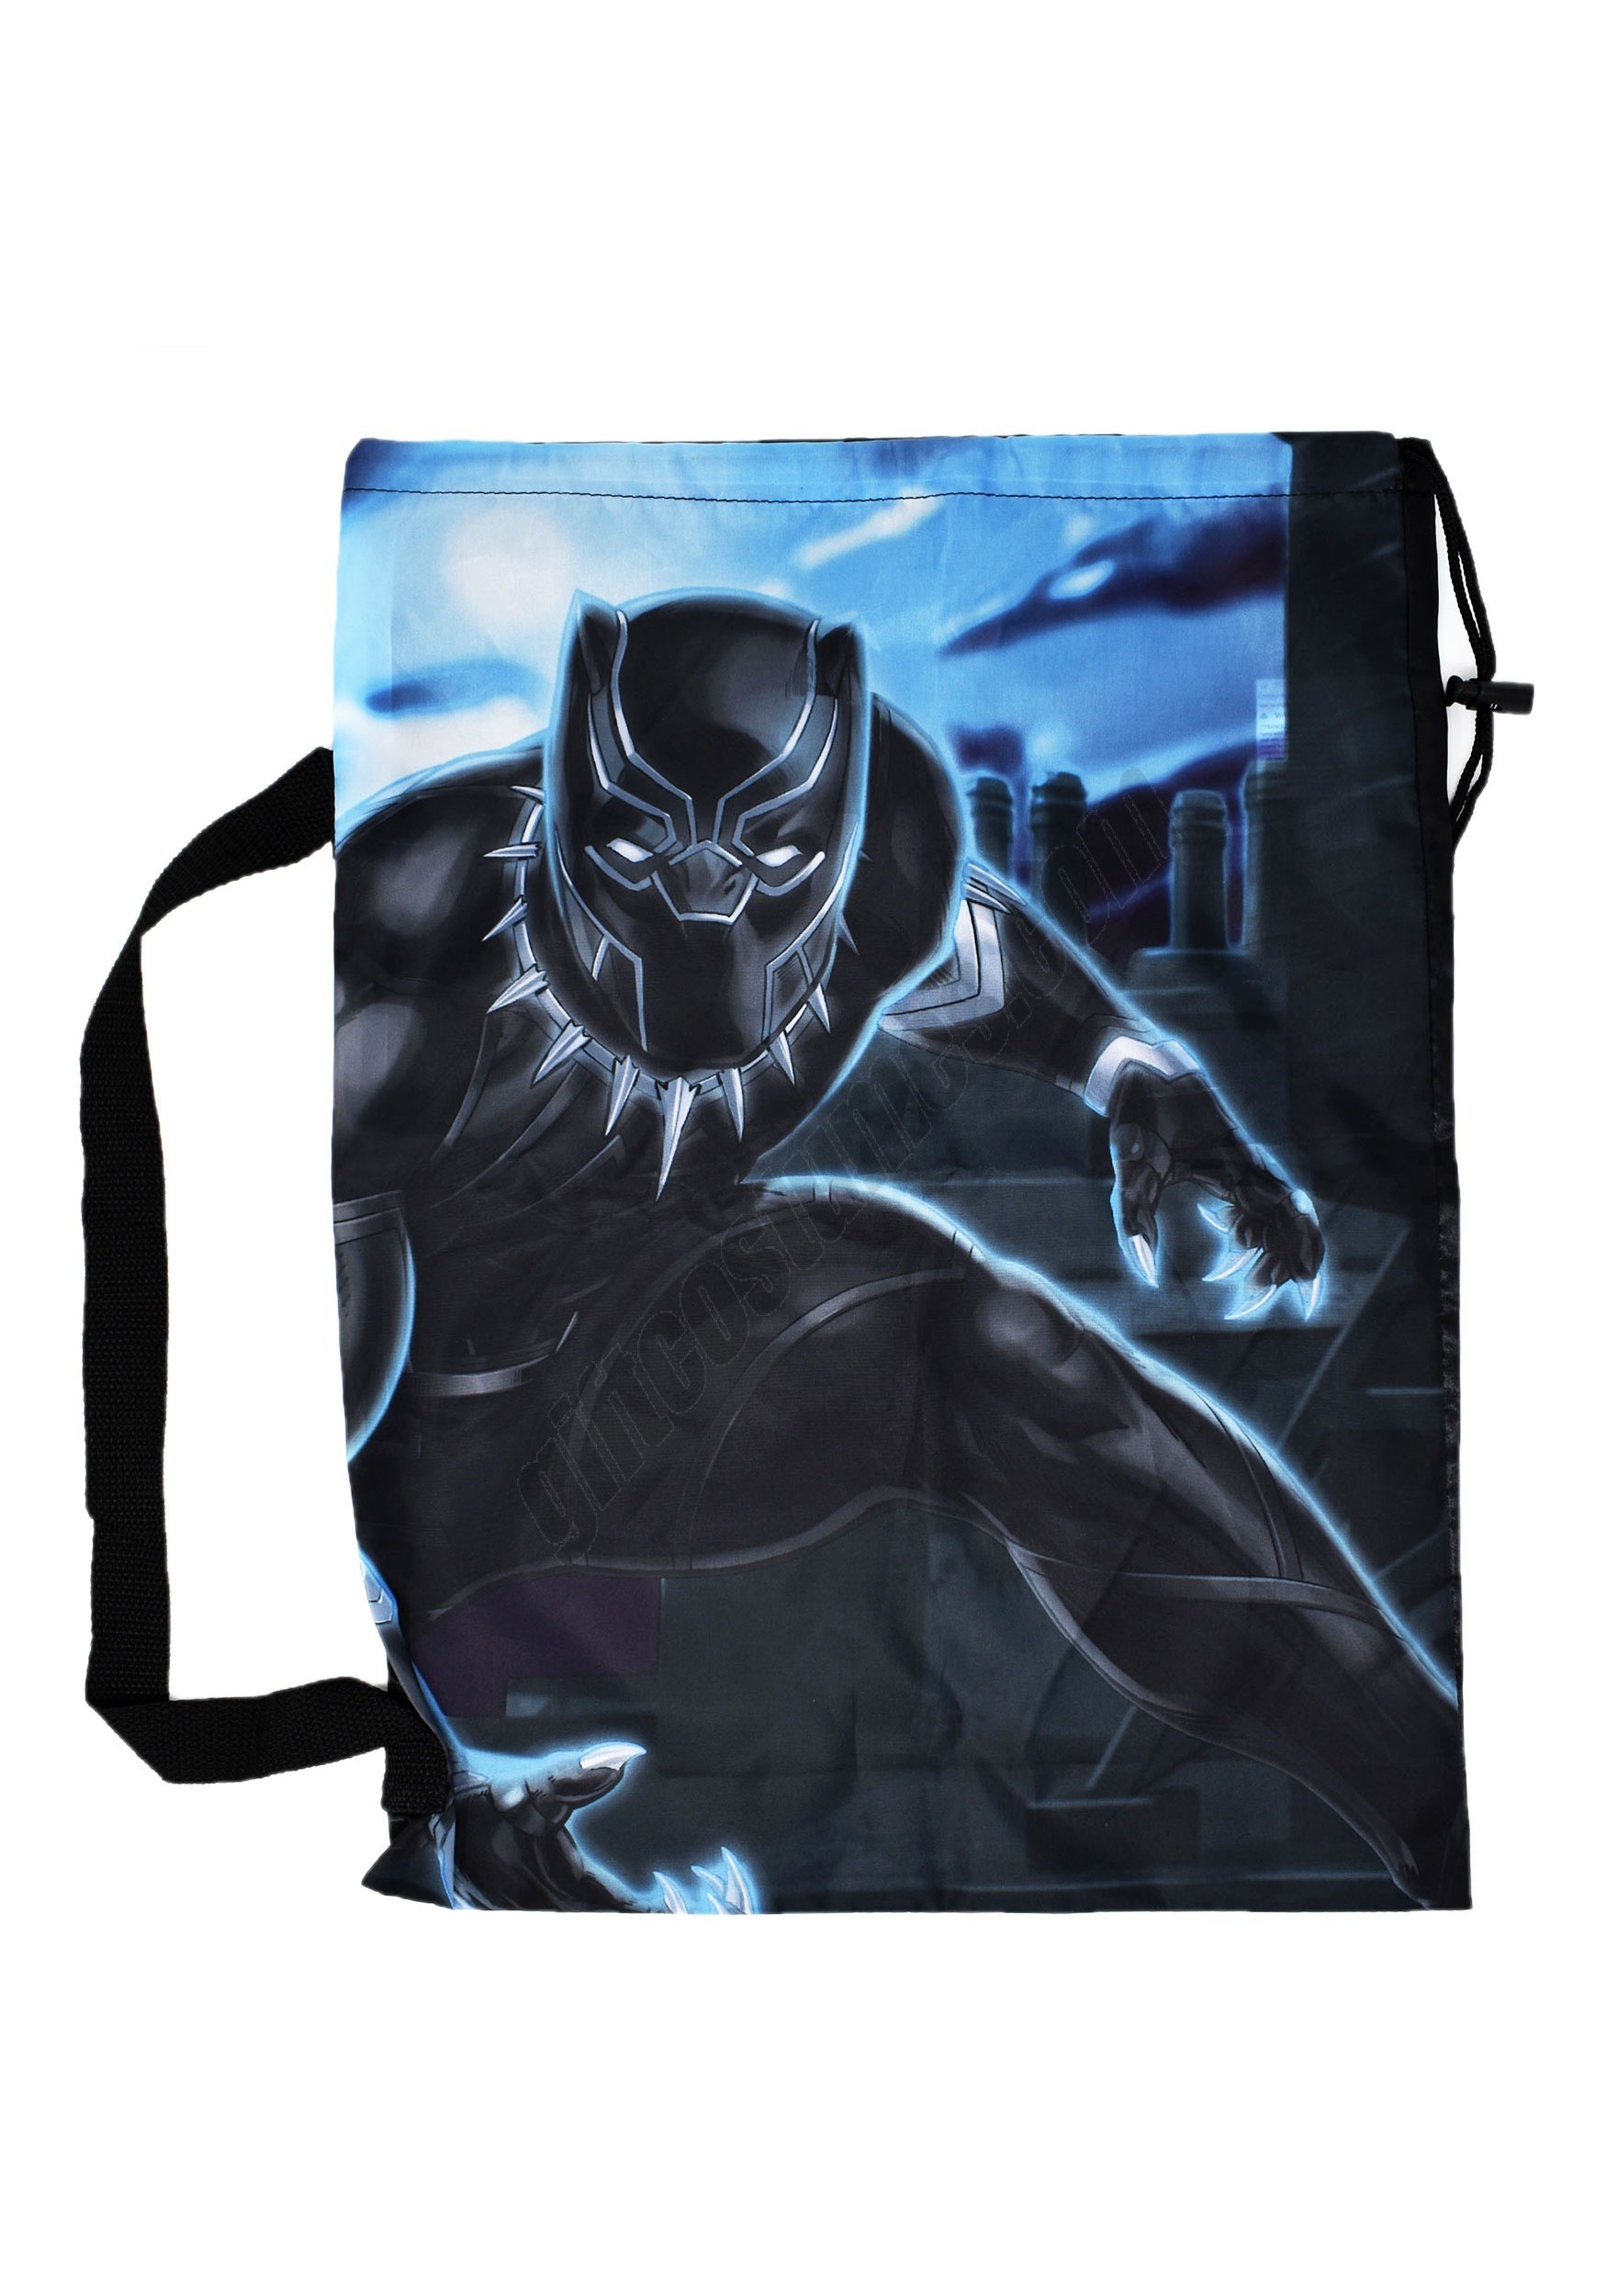 Black Panther Pillow Case Treat Bag Promotions - Black Panther Pillow Case Treat Bag Promotions